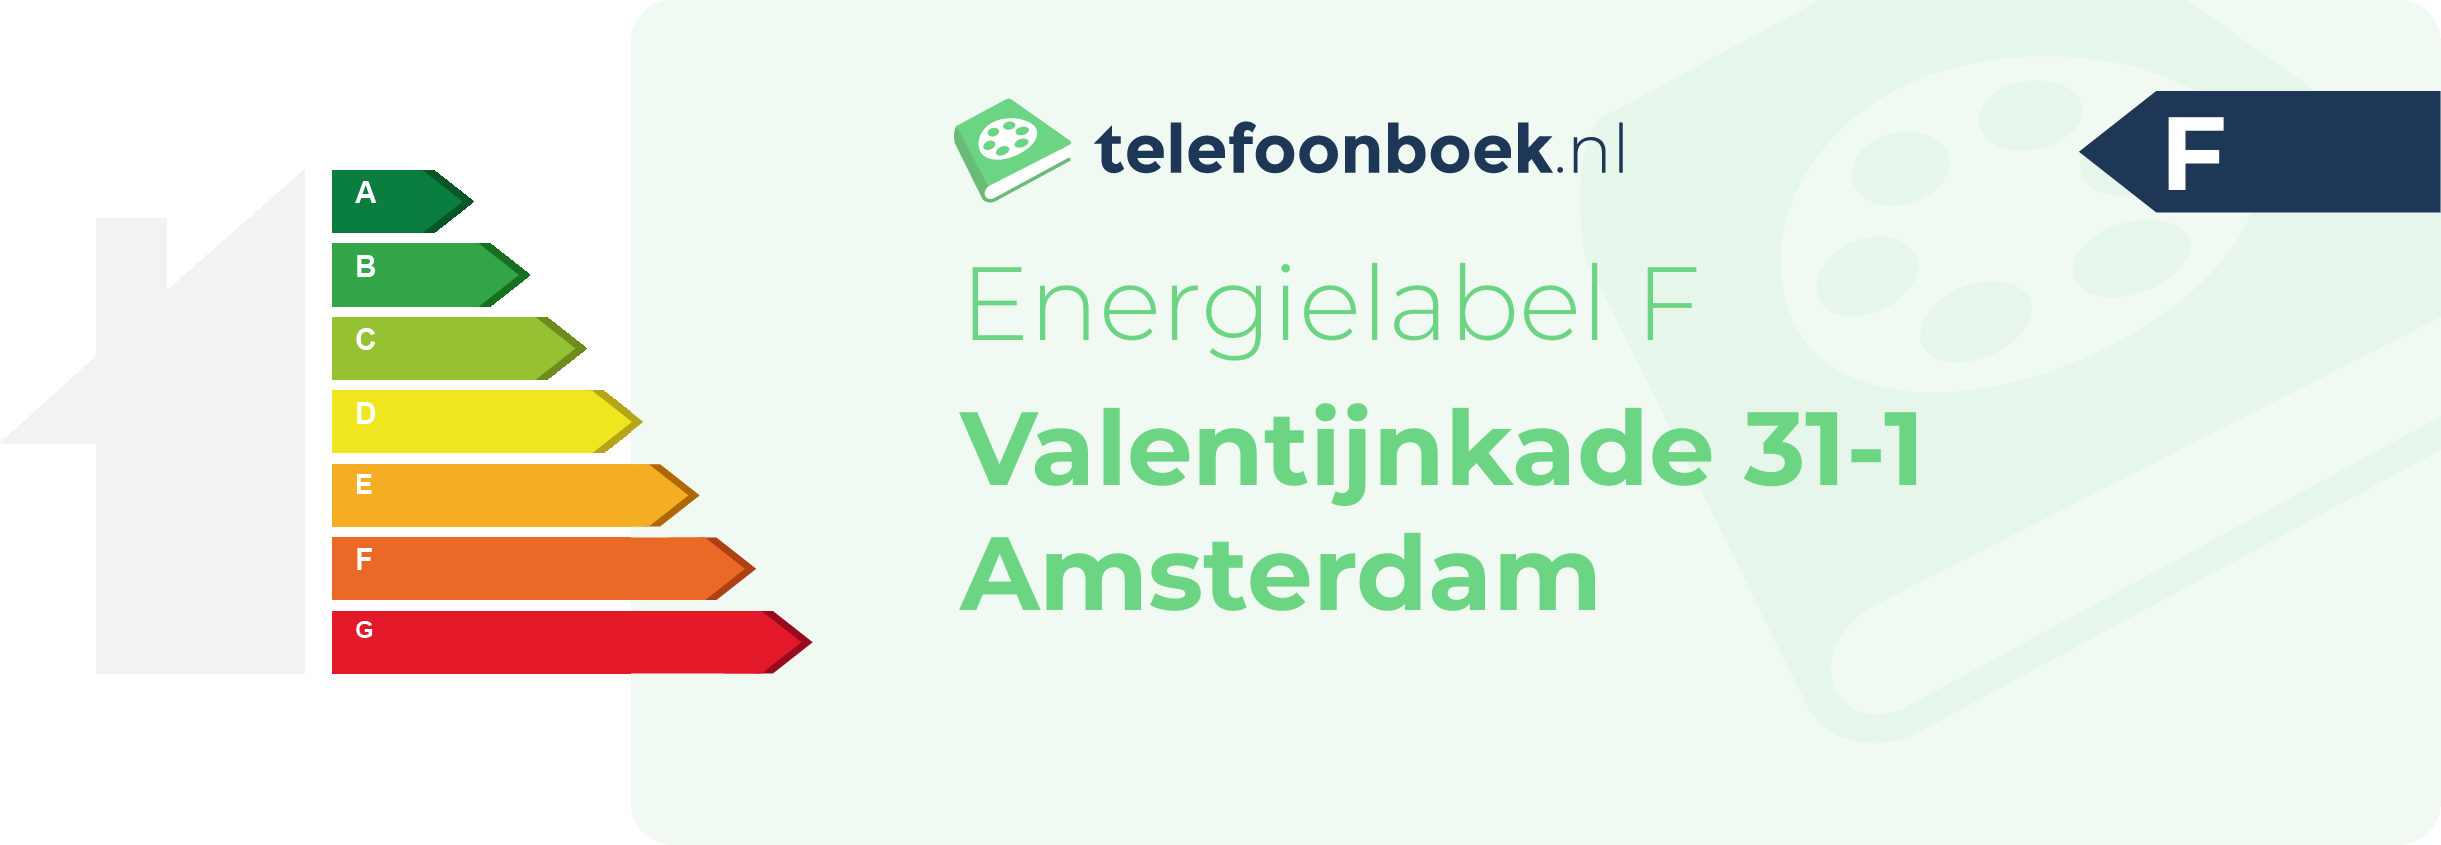 Energielabel Valentijnkade 31-1 Amsterdam